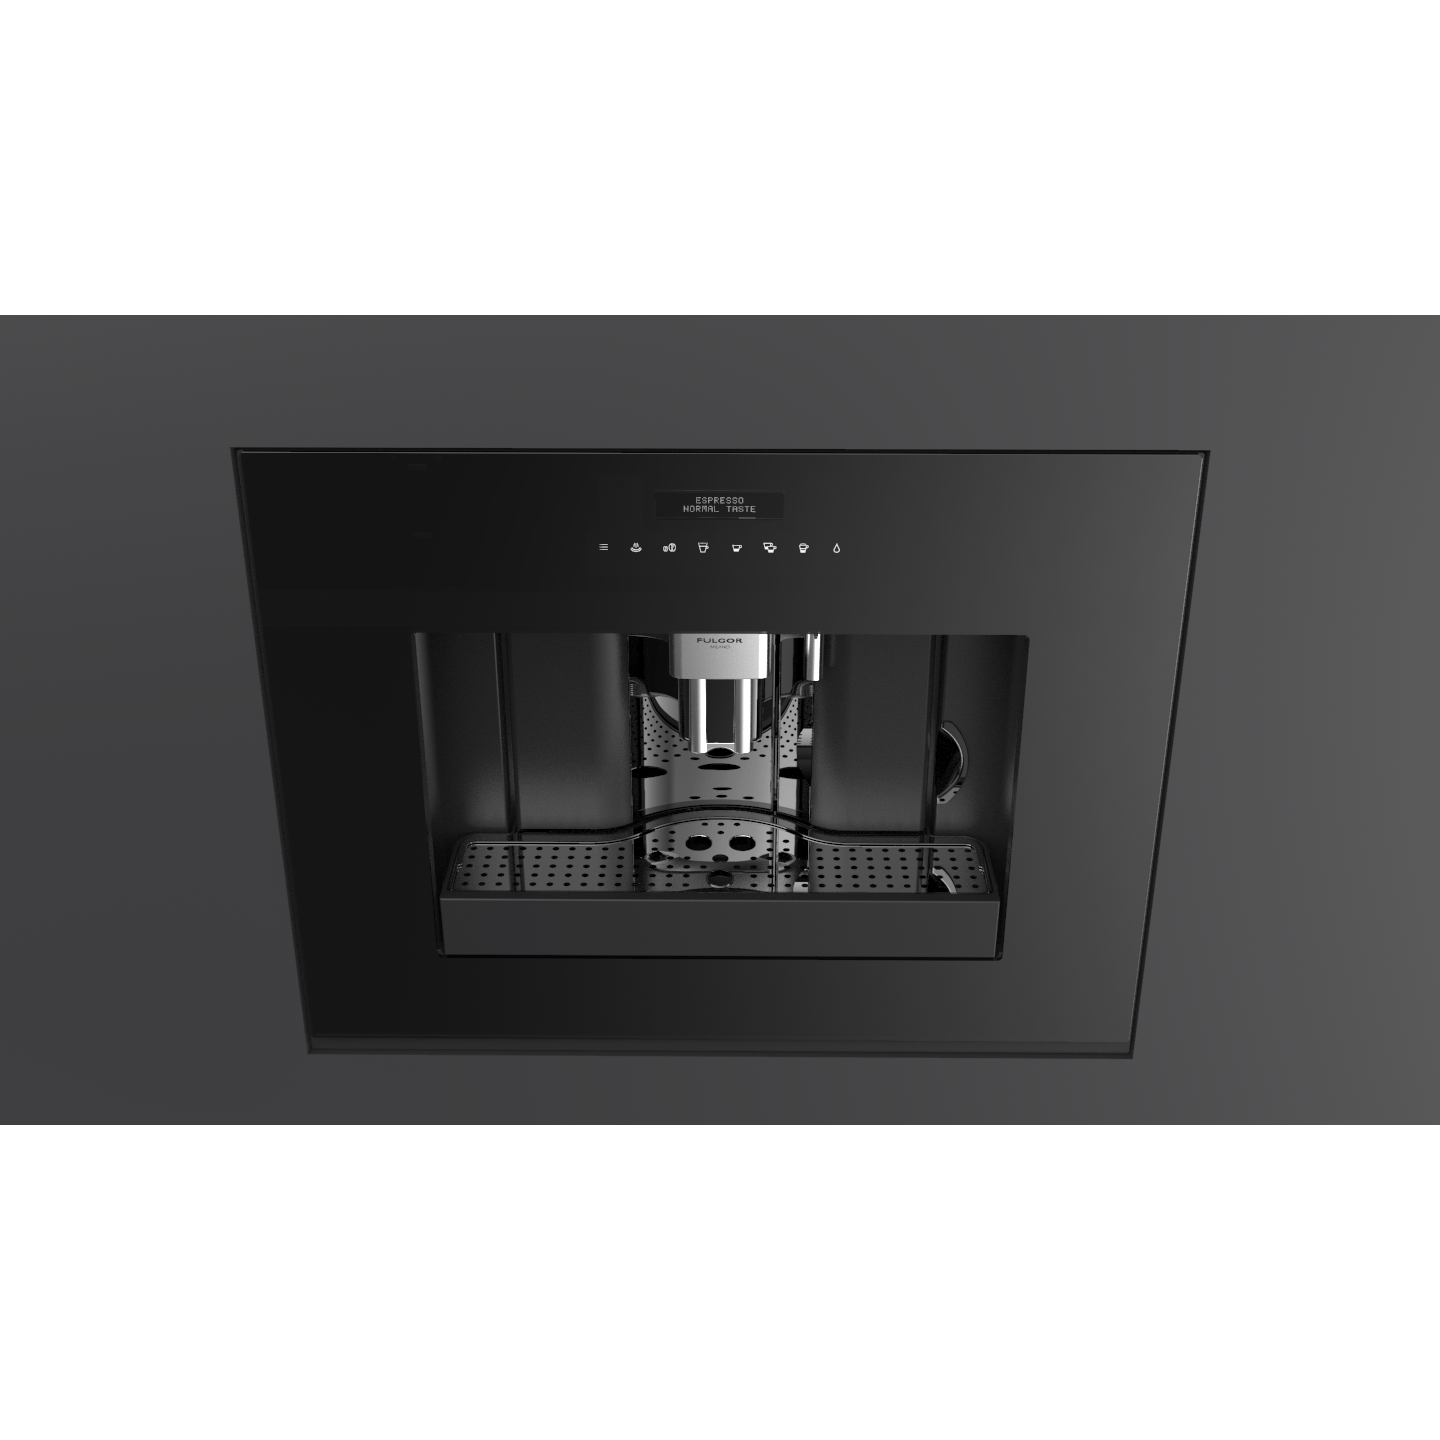 Fulgor Milano 24" Built-In Fully Automatic Coffee Machine, Black Glass - F7BC24B1 Kegerators F7BC24B1 Luxury Appliances Direct